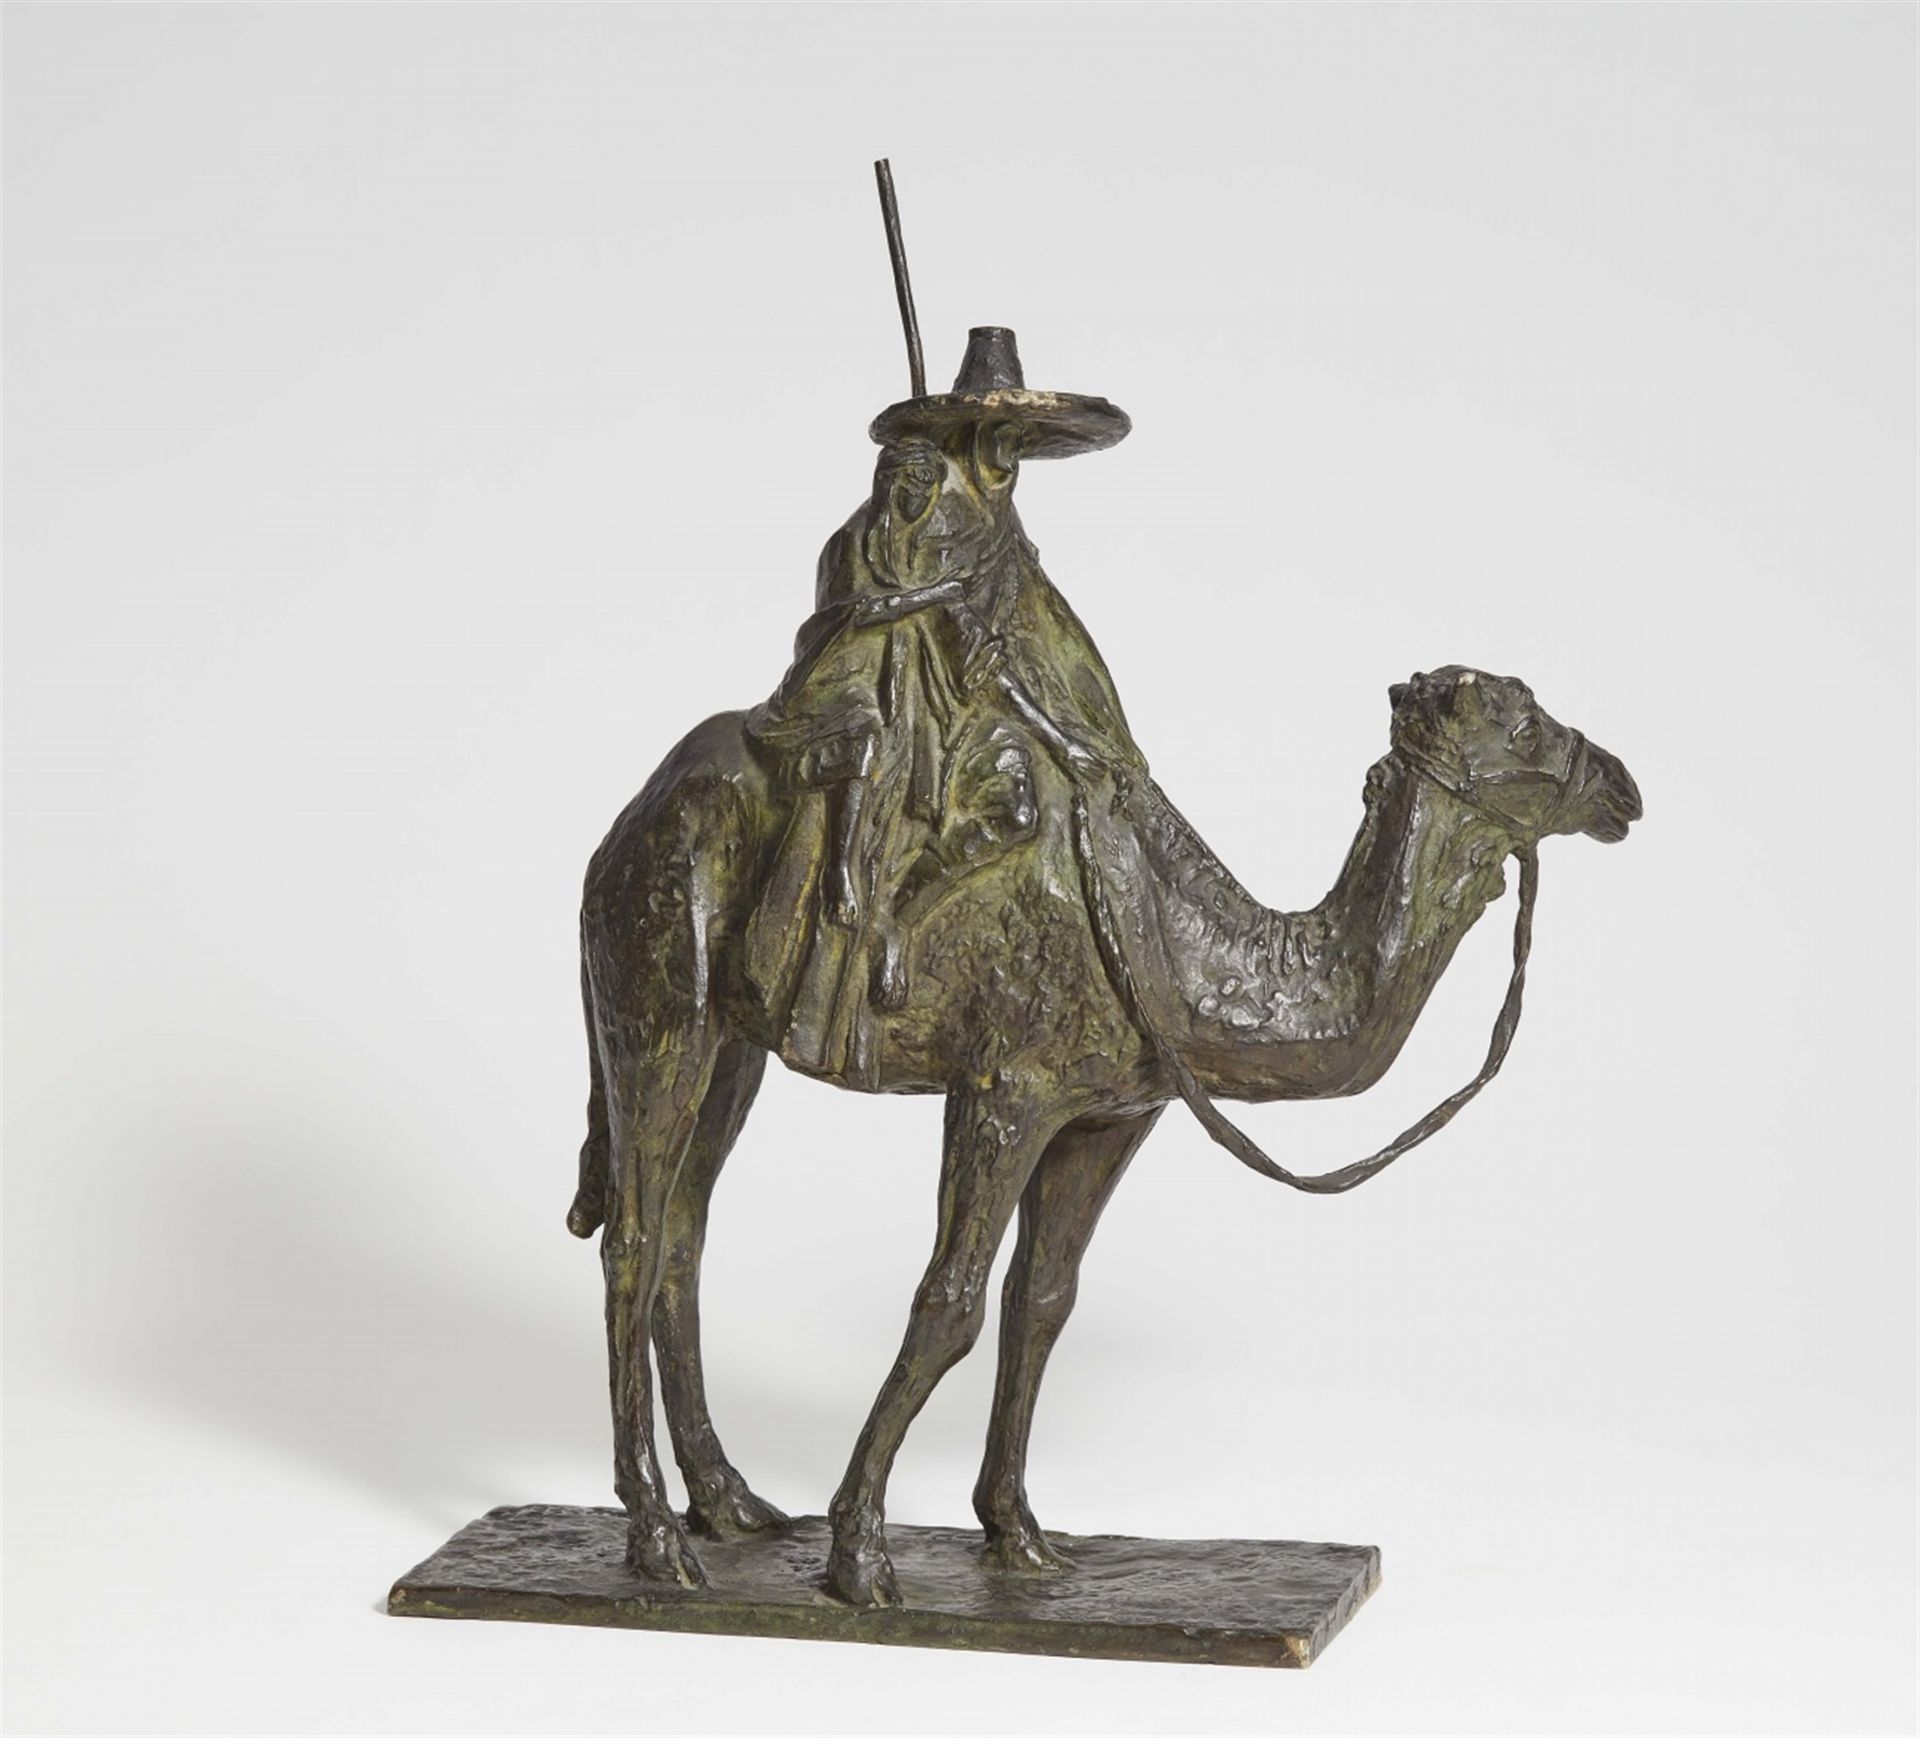 A cast bronze figure of a man riding a camel